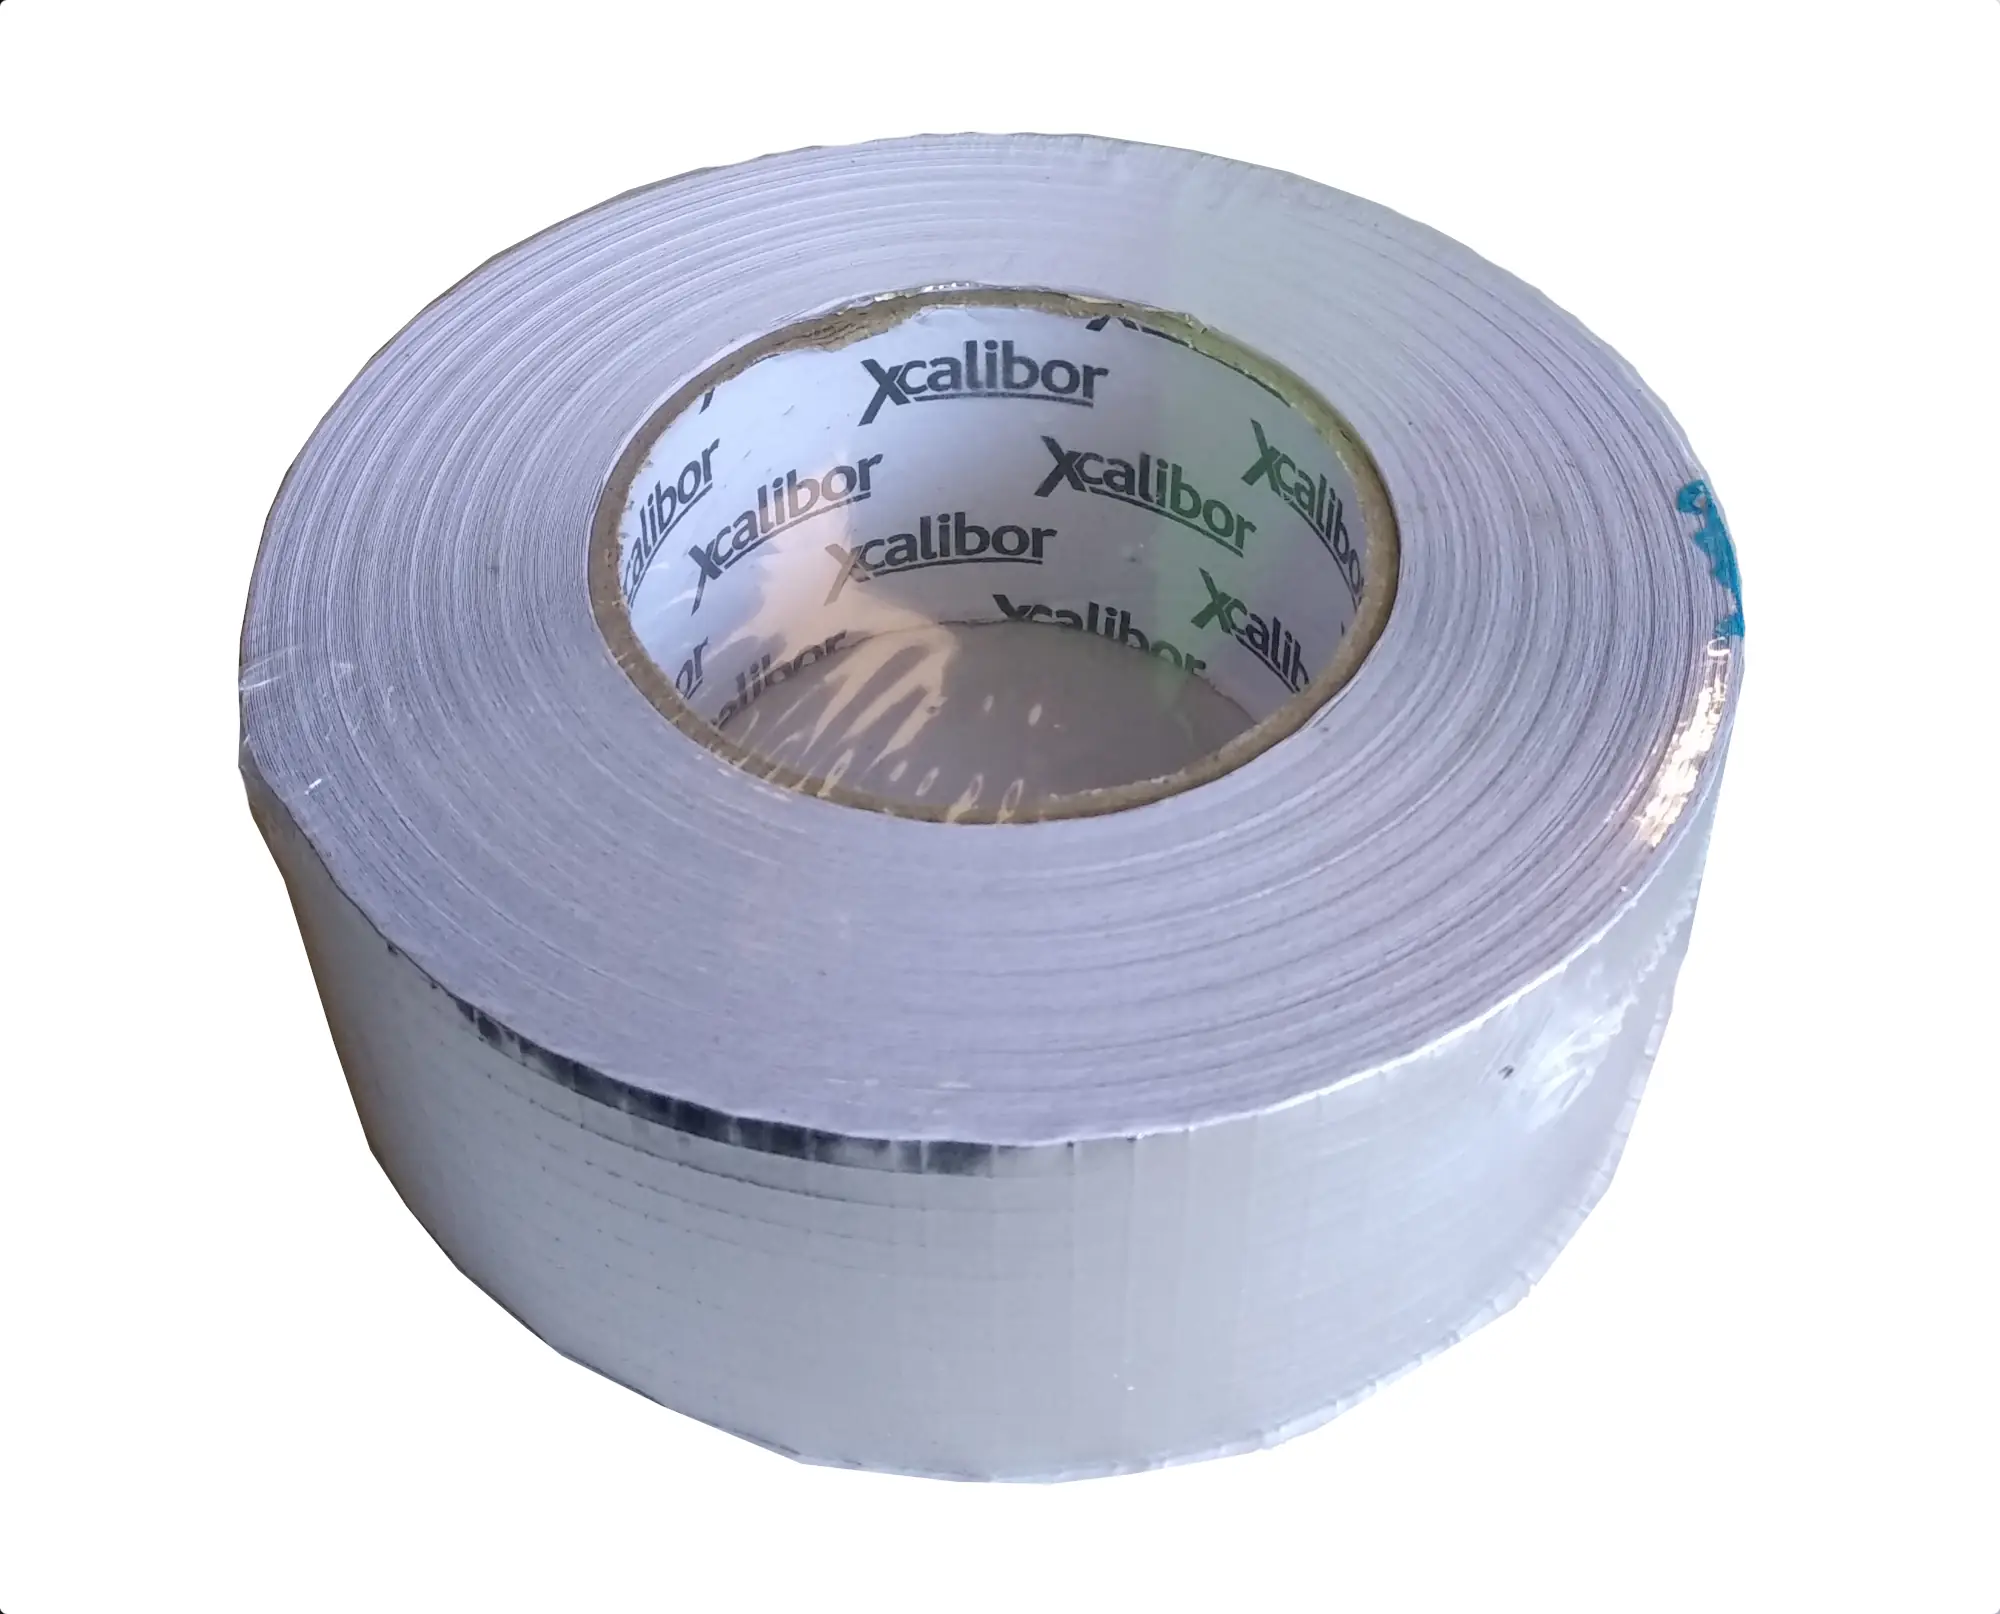 Xcalibor Alu Tape